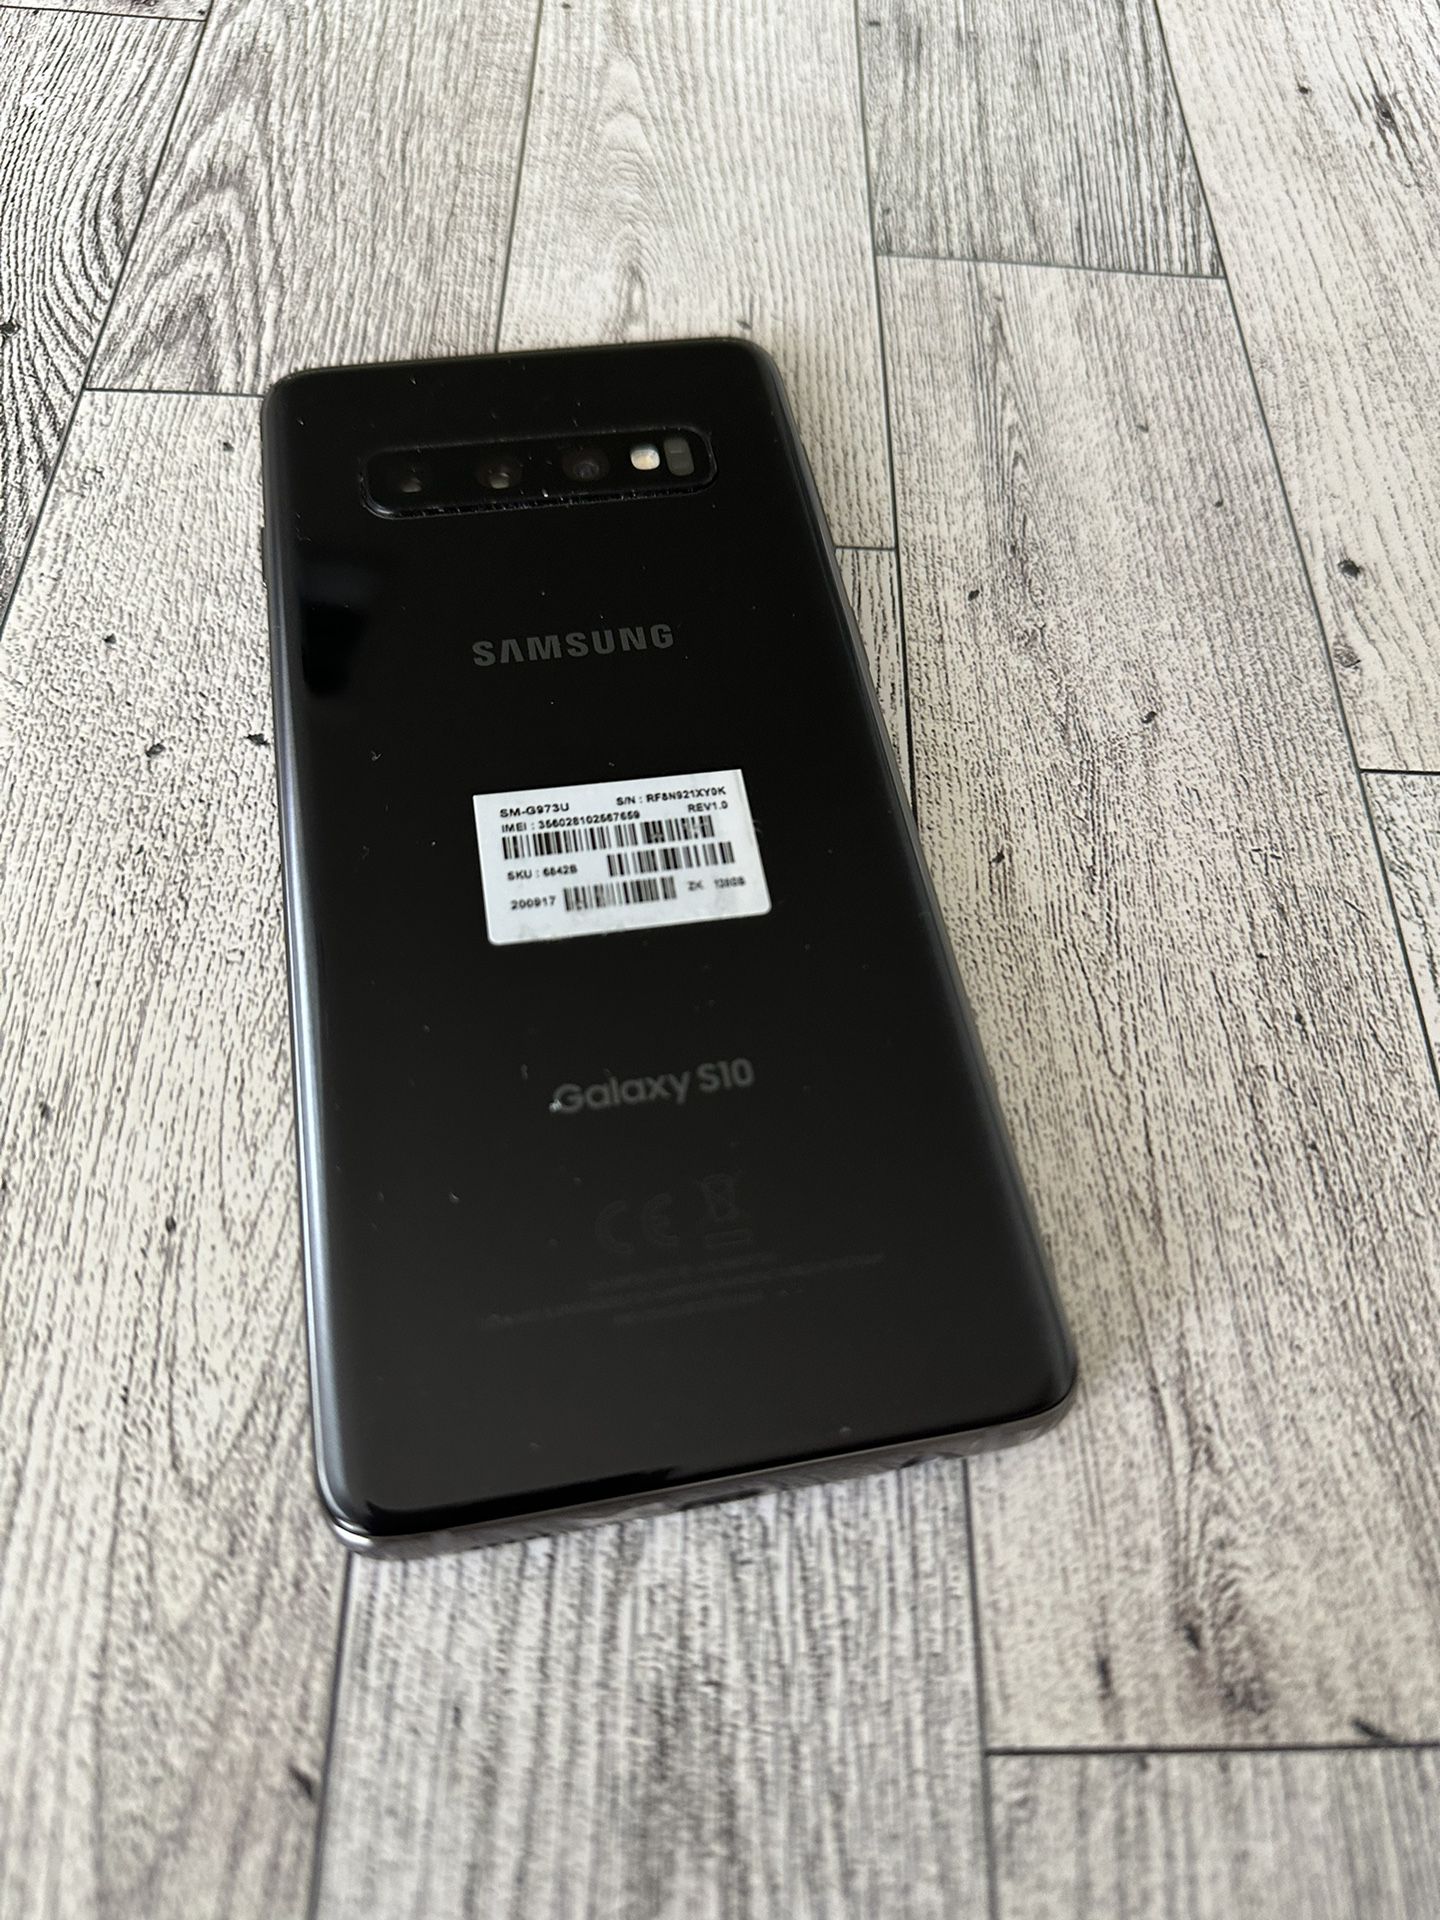 Samsung Galaxy  📲 S10  (128GB)  UNLOCKED 🌎DESBLOQUEADO For All Carries